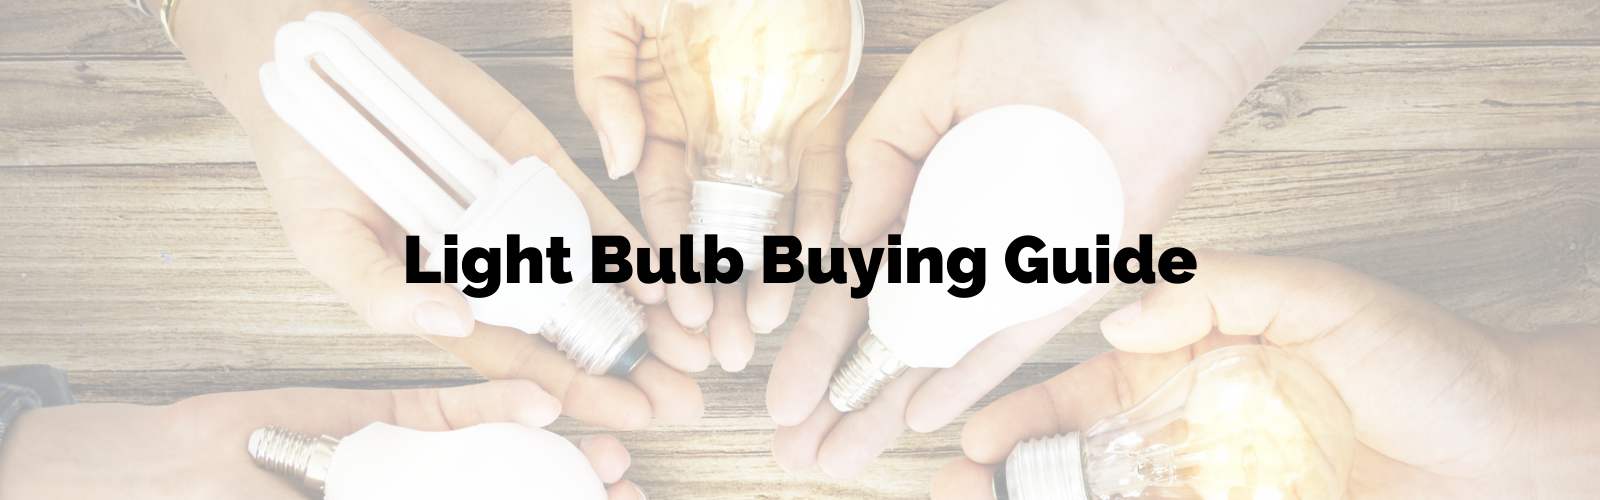 Light Bulb Buying Guide